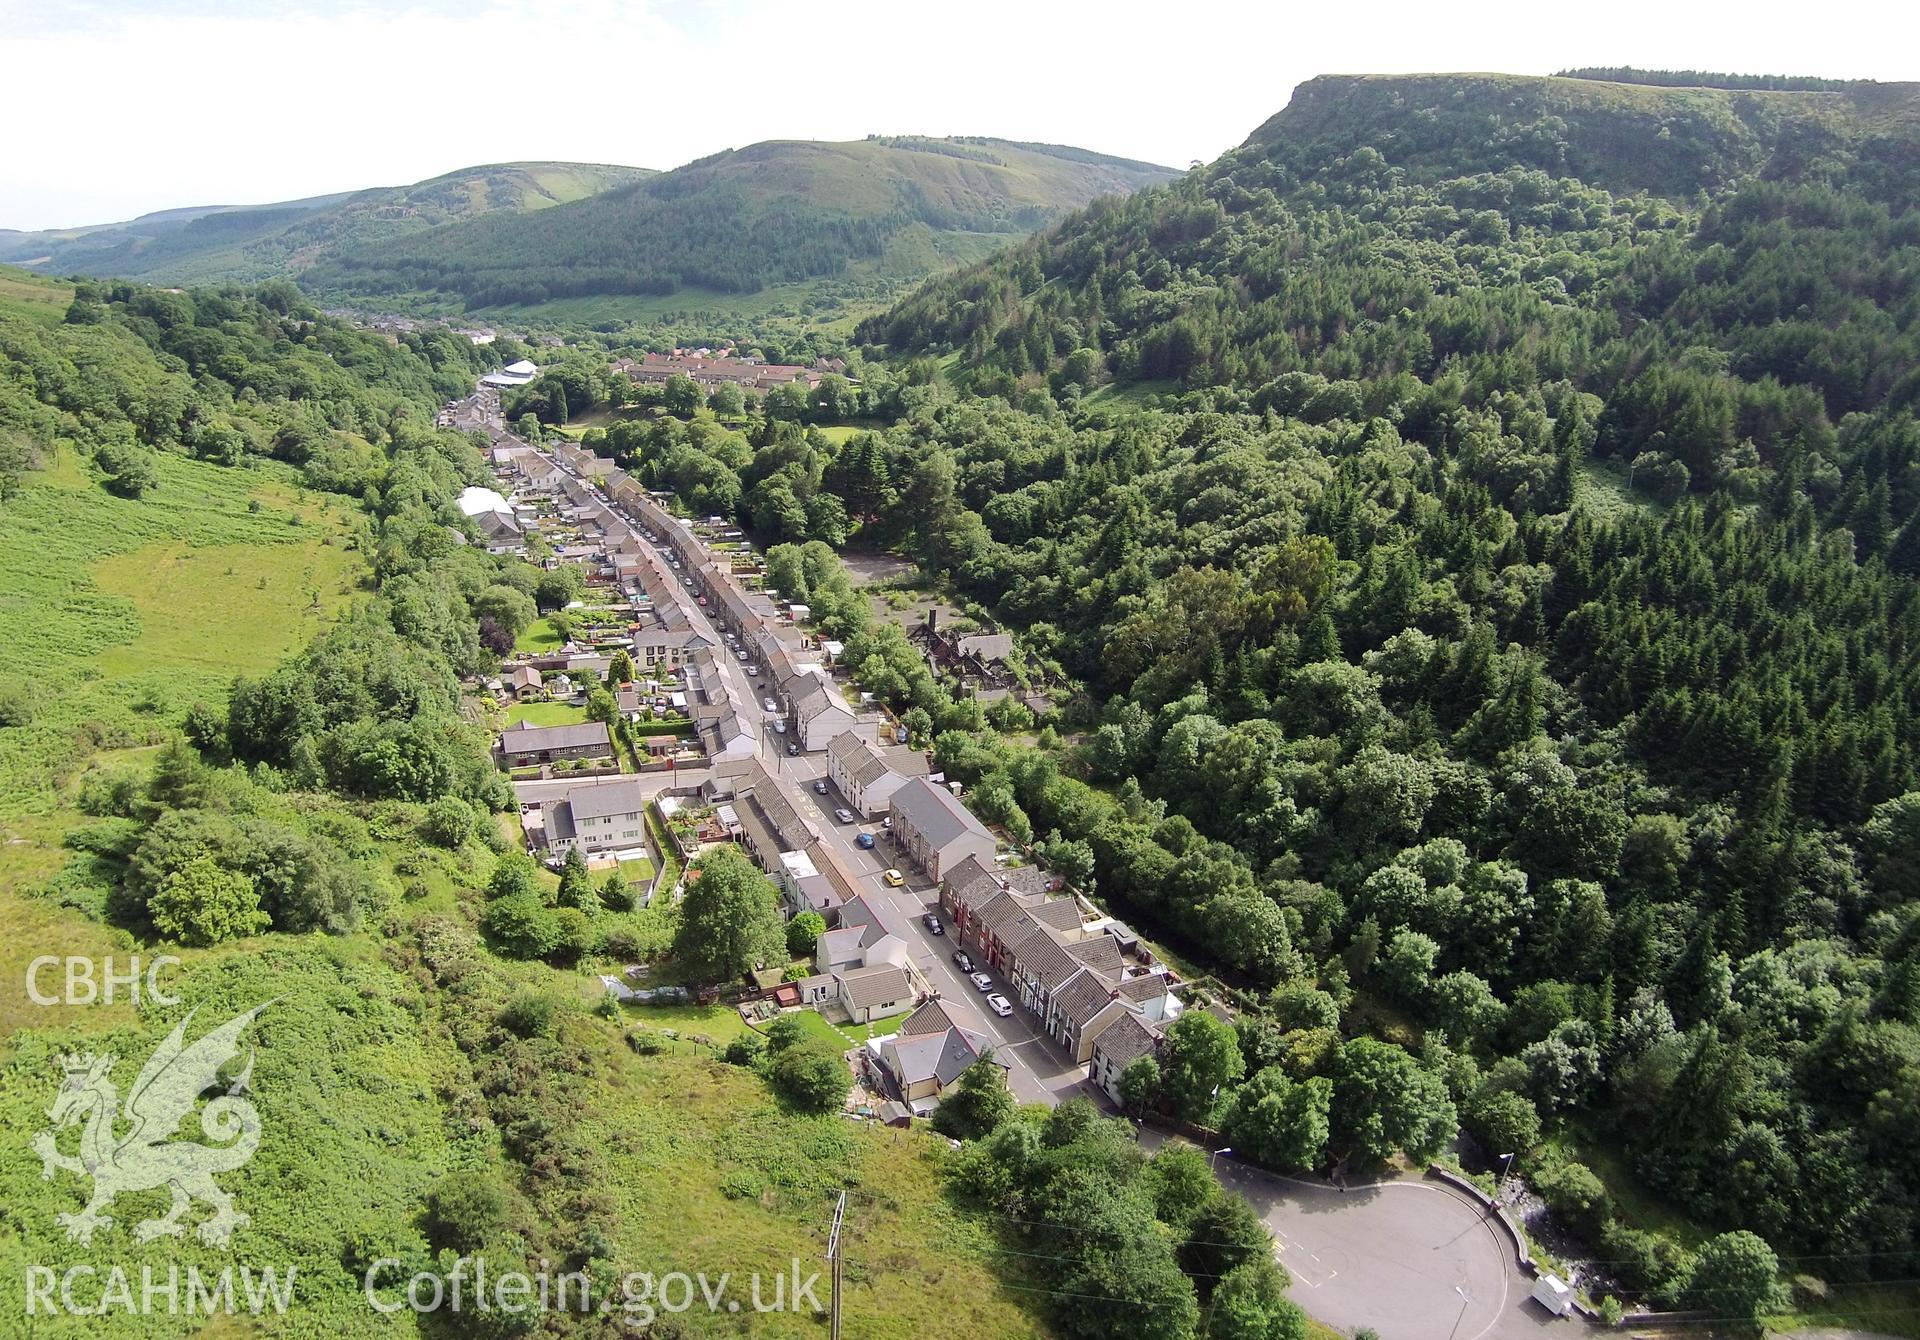 Colour aerial photo showing Blaenrhondda, taken by Paul R. Davis, 10th July 2015.